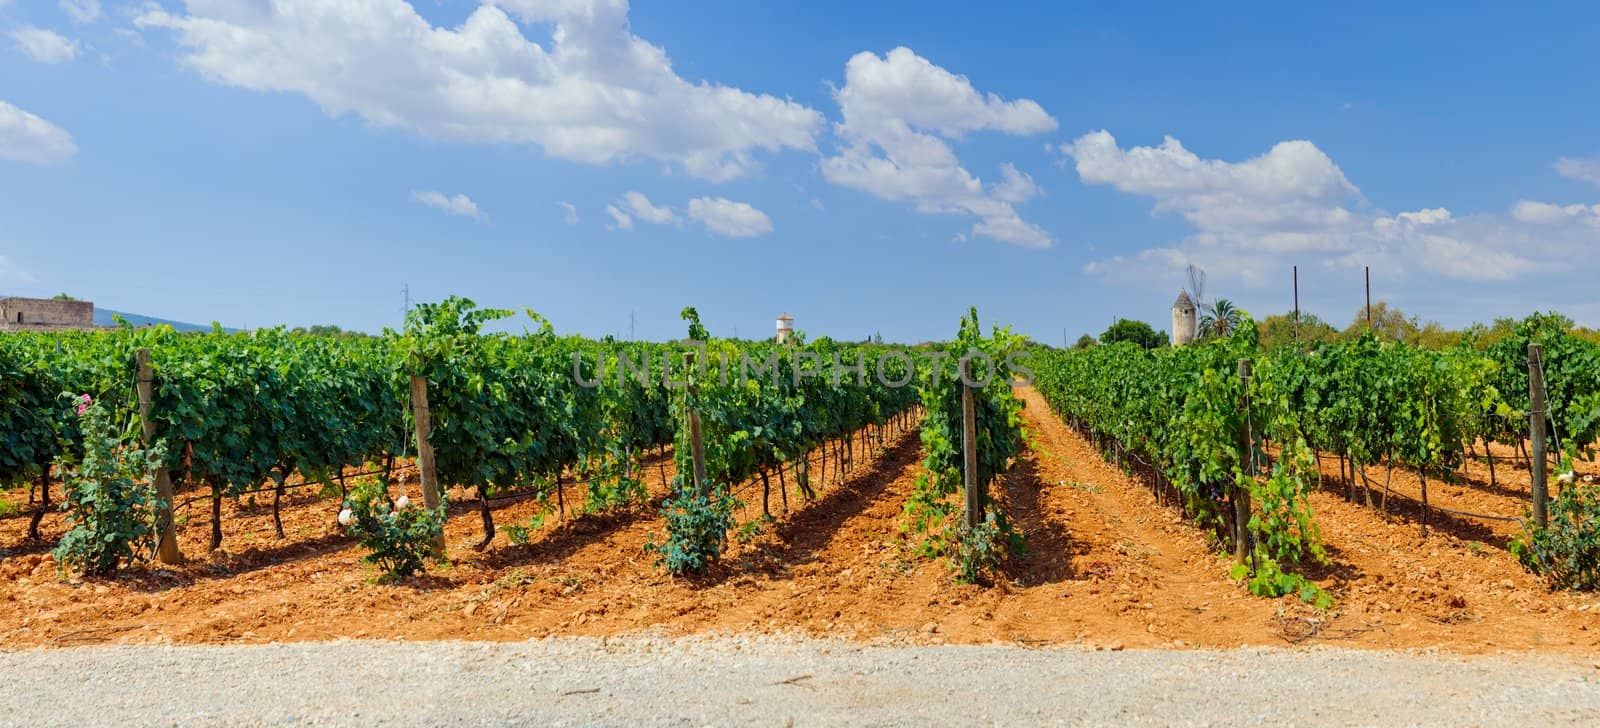 Vineyards in Mallorca. Spain. Panorama by maxoliki